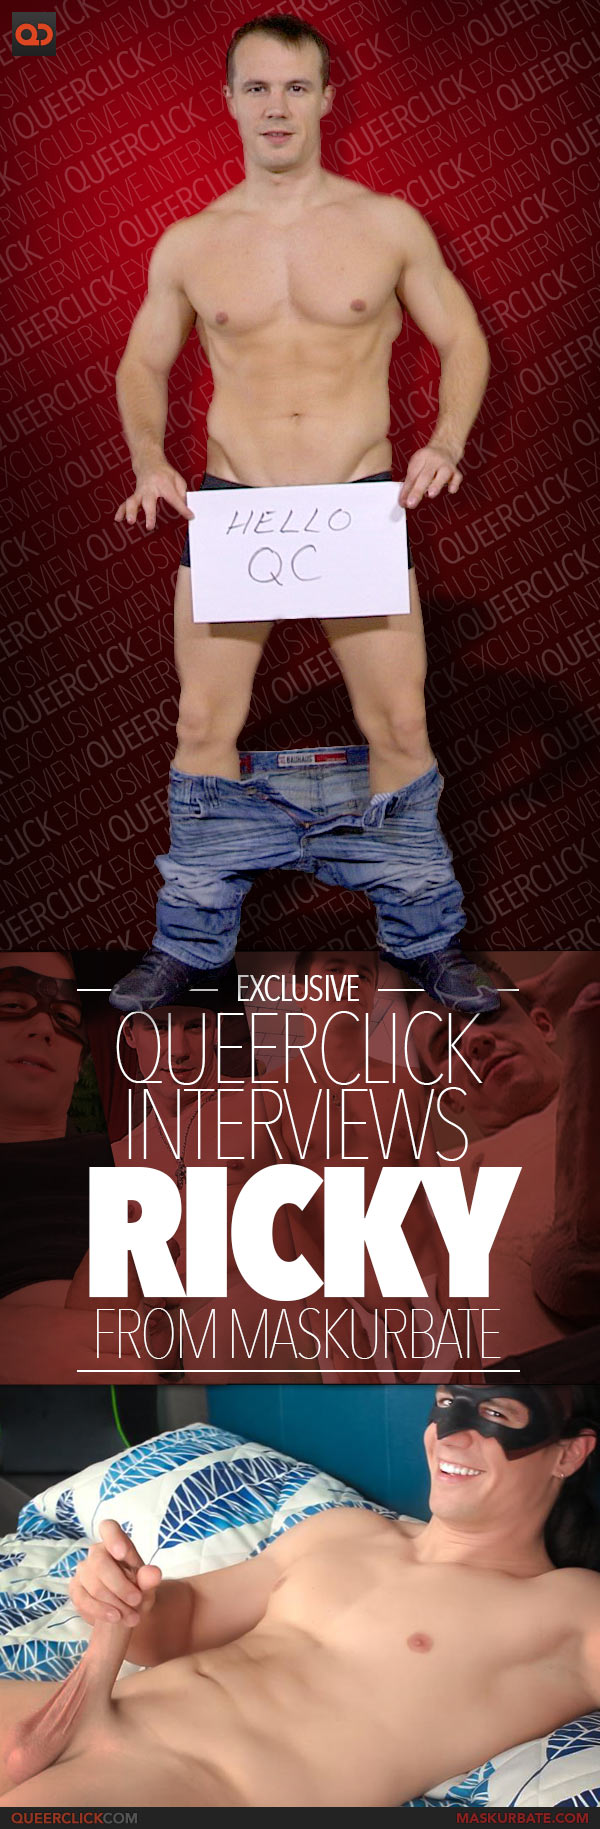 QueerClick Interviews Maskurbate's Rick!